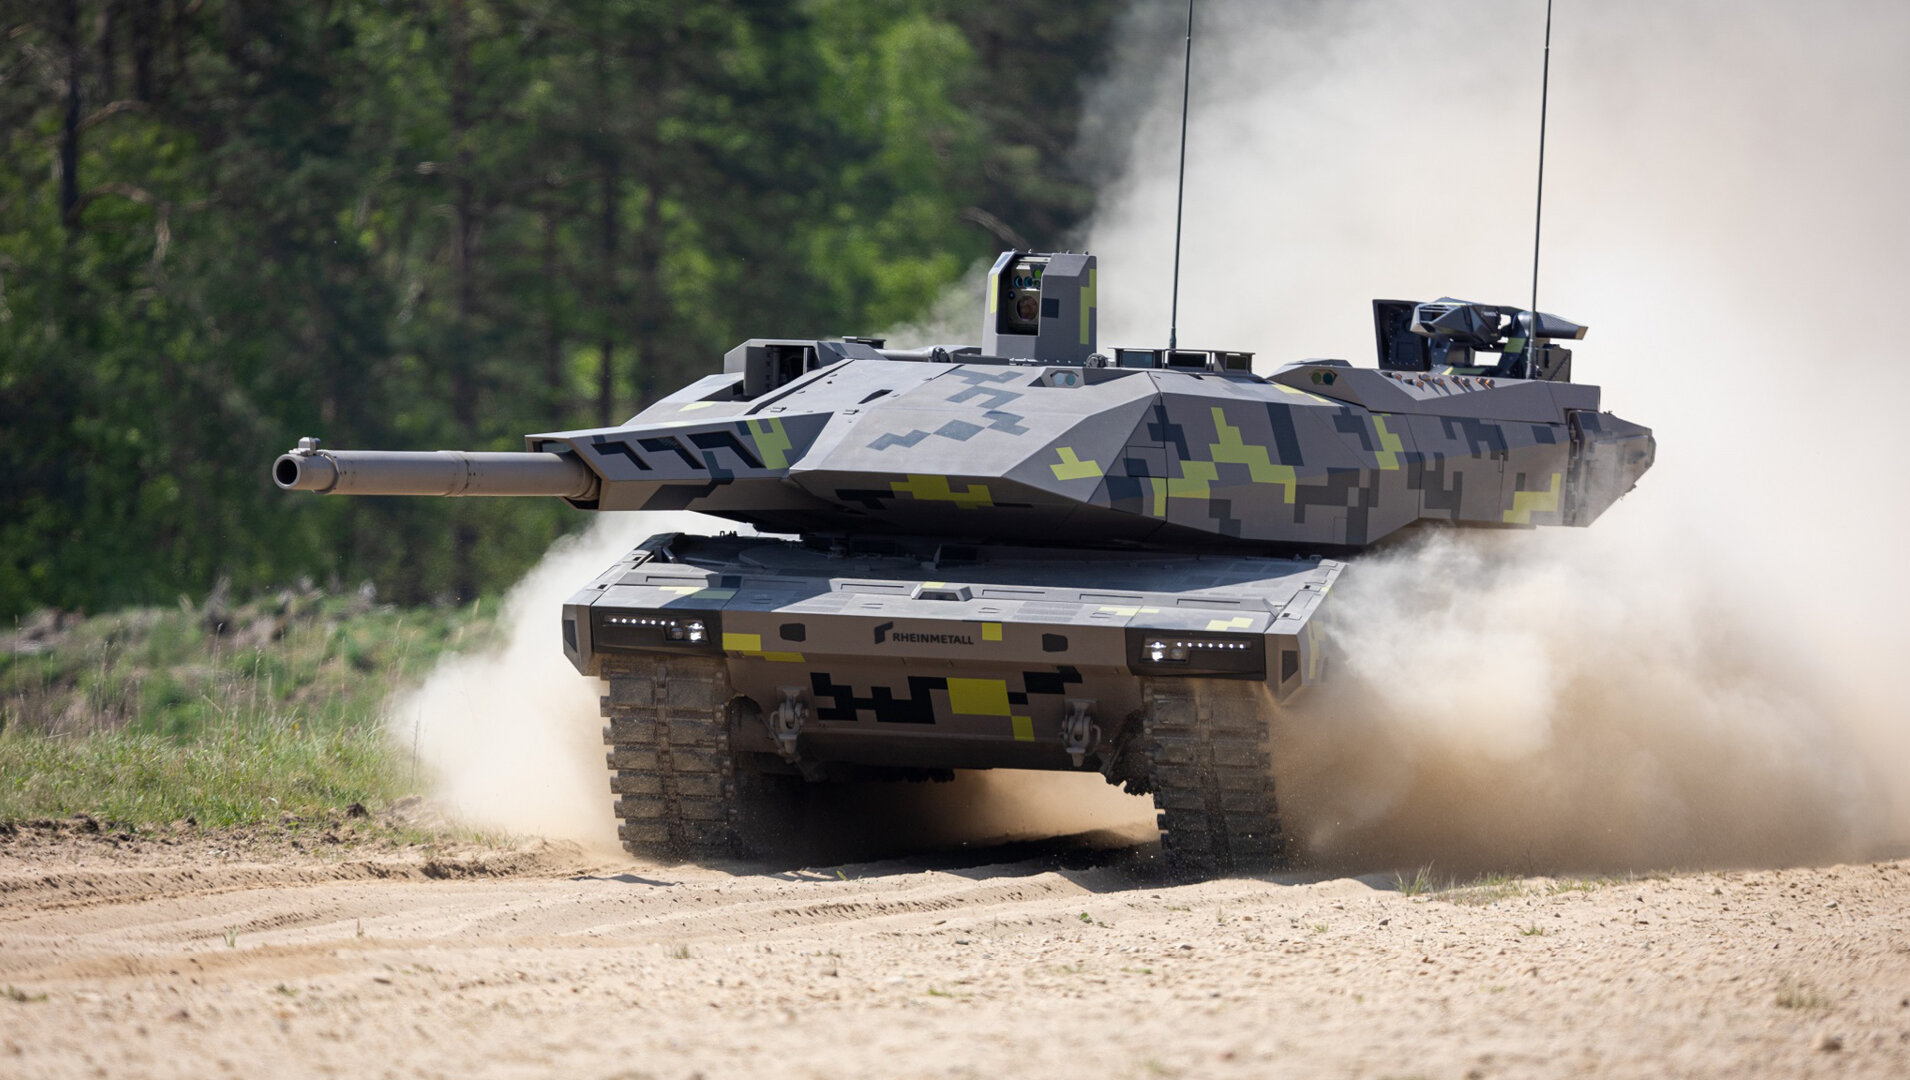 Panther KF51 main battle tank